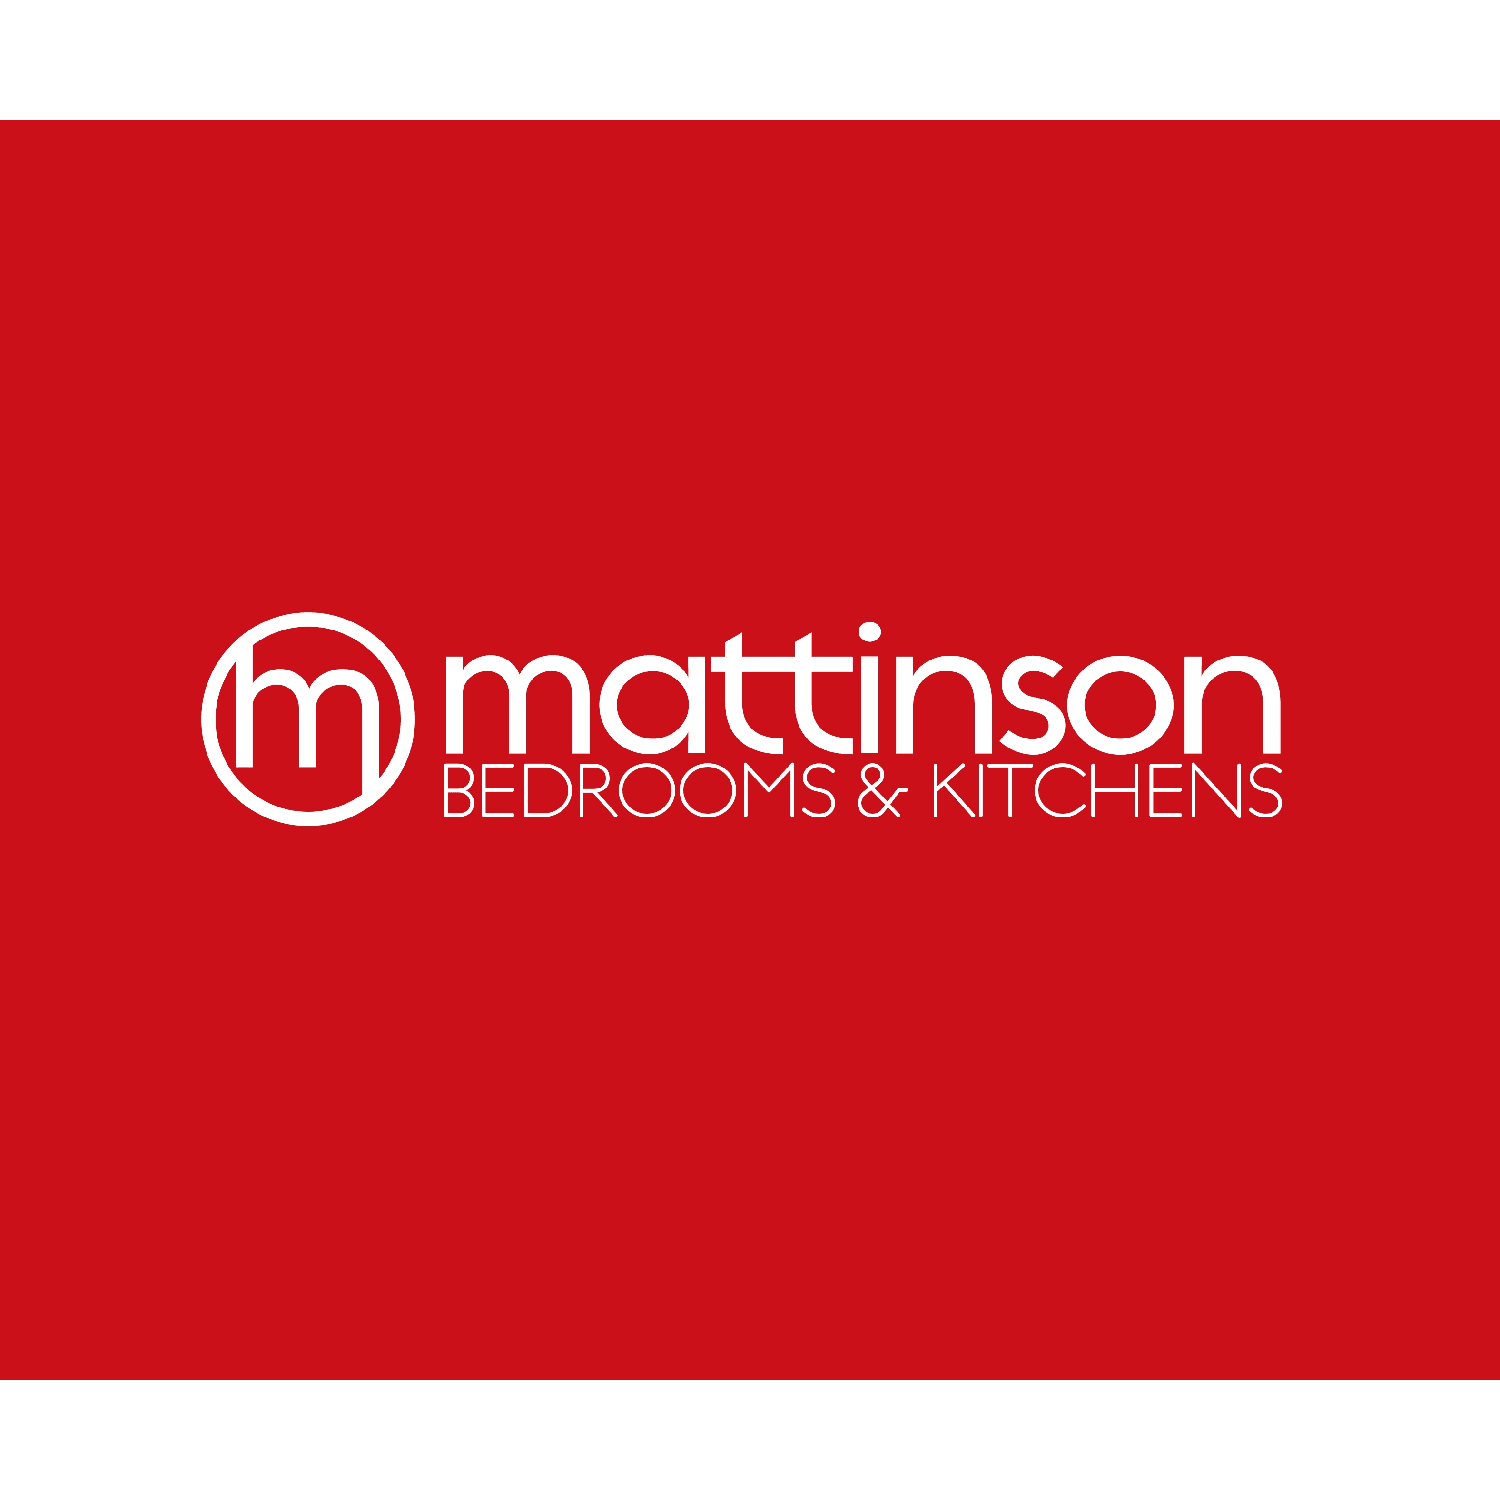 Mattinson Bedrooms - Cramlington, Northumberland NE23 8AD - 01670 736962 | ShowMeLocal.com